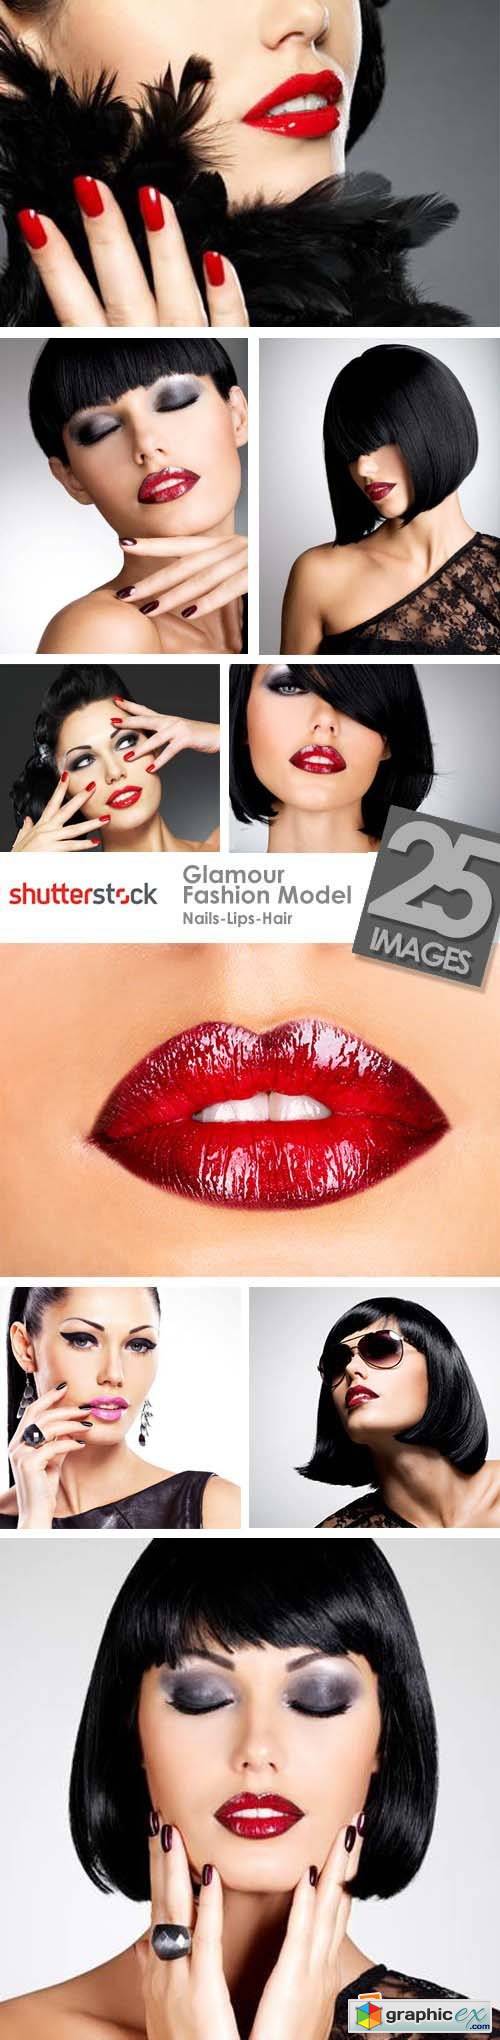 Glamour Fashion Model, Nails-Lips-Hair 25xJPG